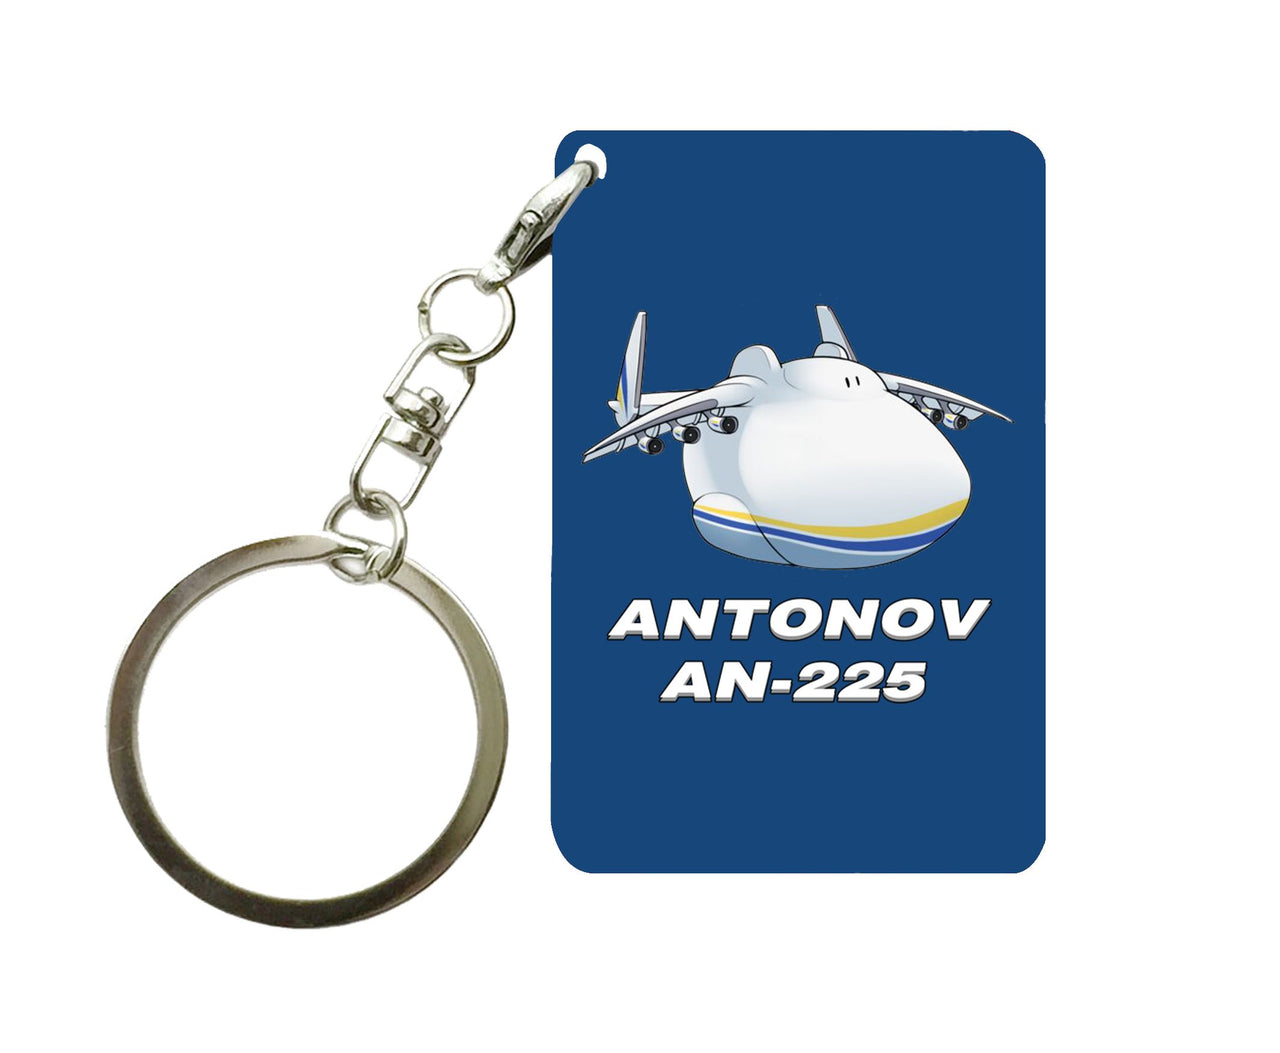 Antonov AN-225 (21) Designed Key Chains